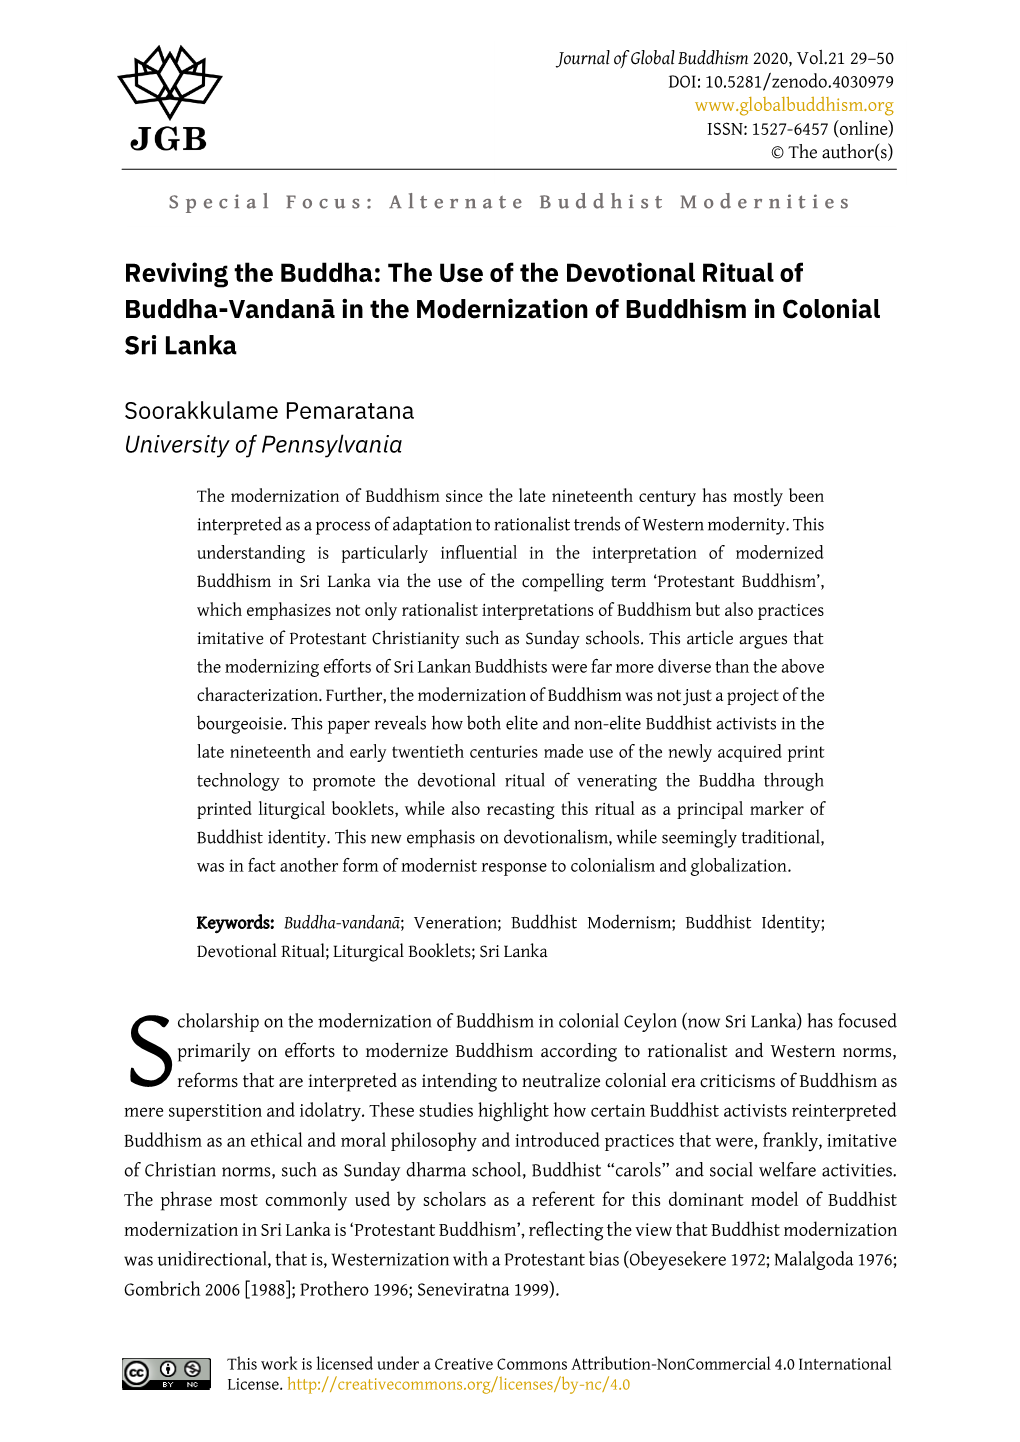 The Use of the Devotional Ritual of Buddha-Vandanā in the Modernization of Buddhism in Colonial Sri Lanka